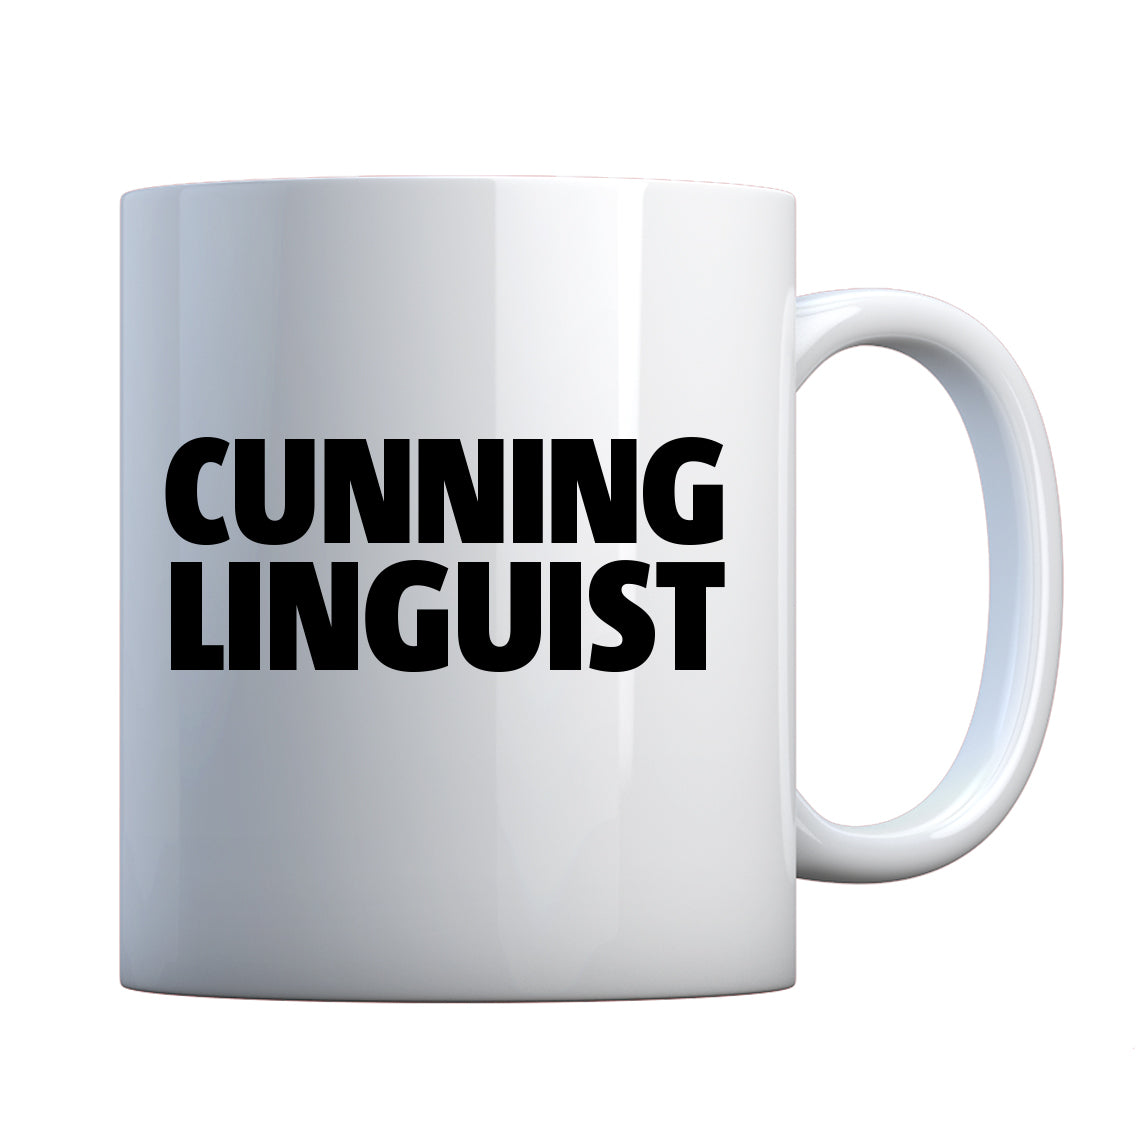 Mug Cunning Linguist Ceramic Gift Mug